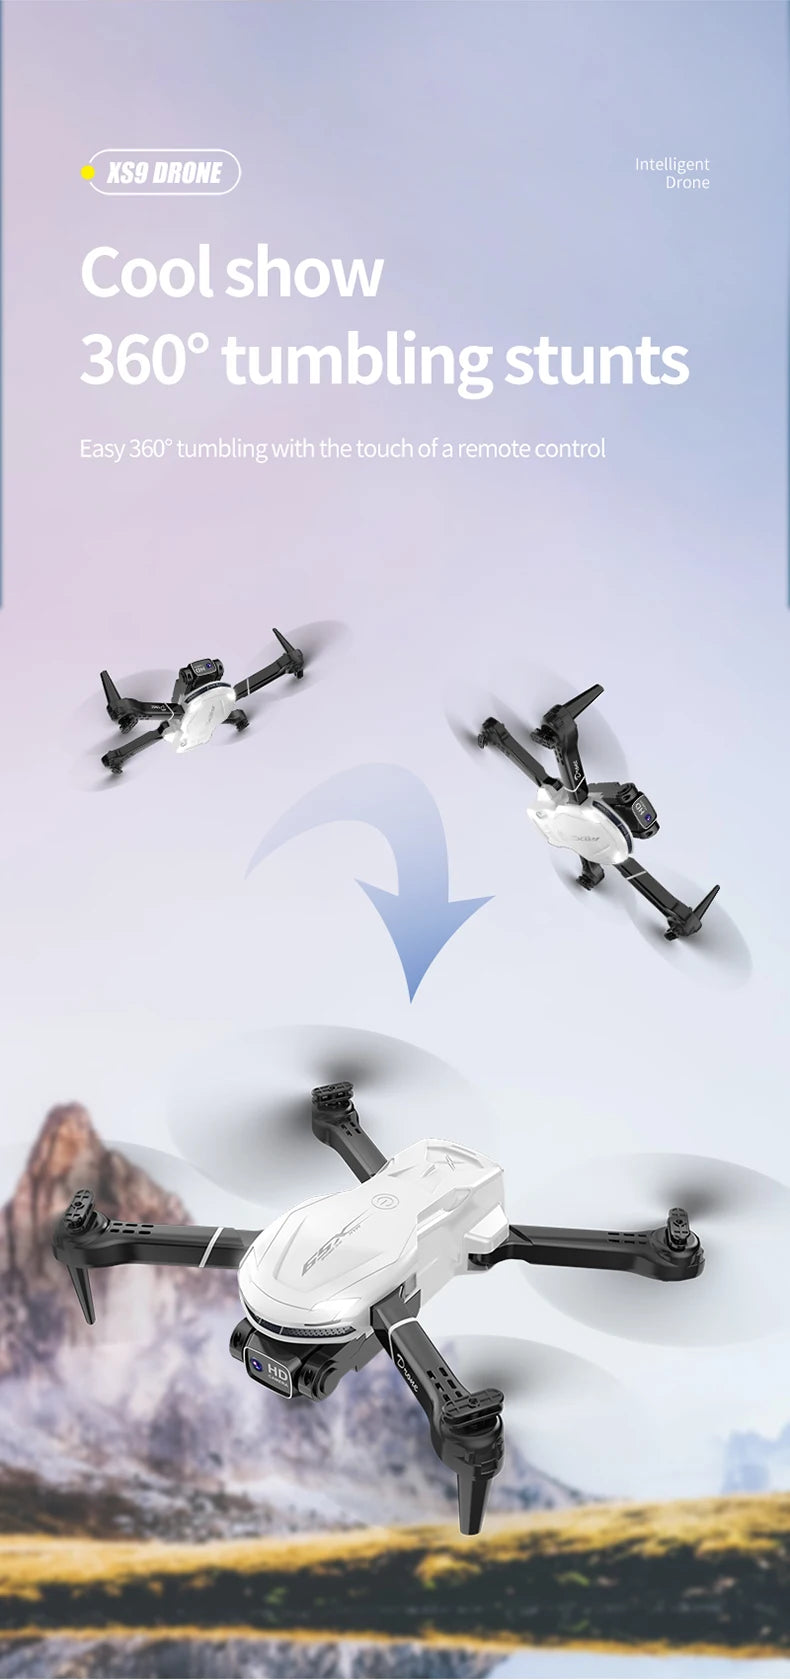 XS9 Drone, 7S9 DRONE Intelligent Drrome Cool show 3608 tumbling stunts Easy